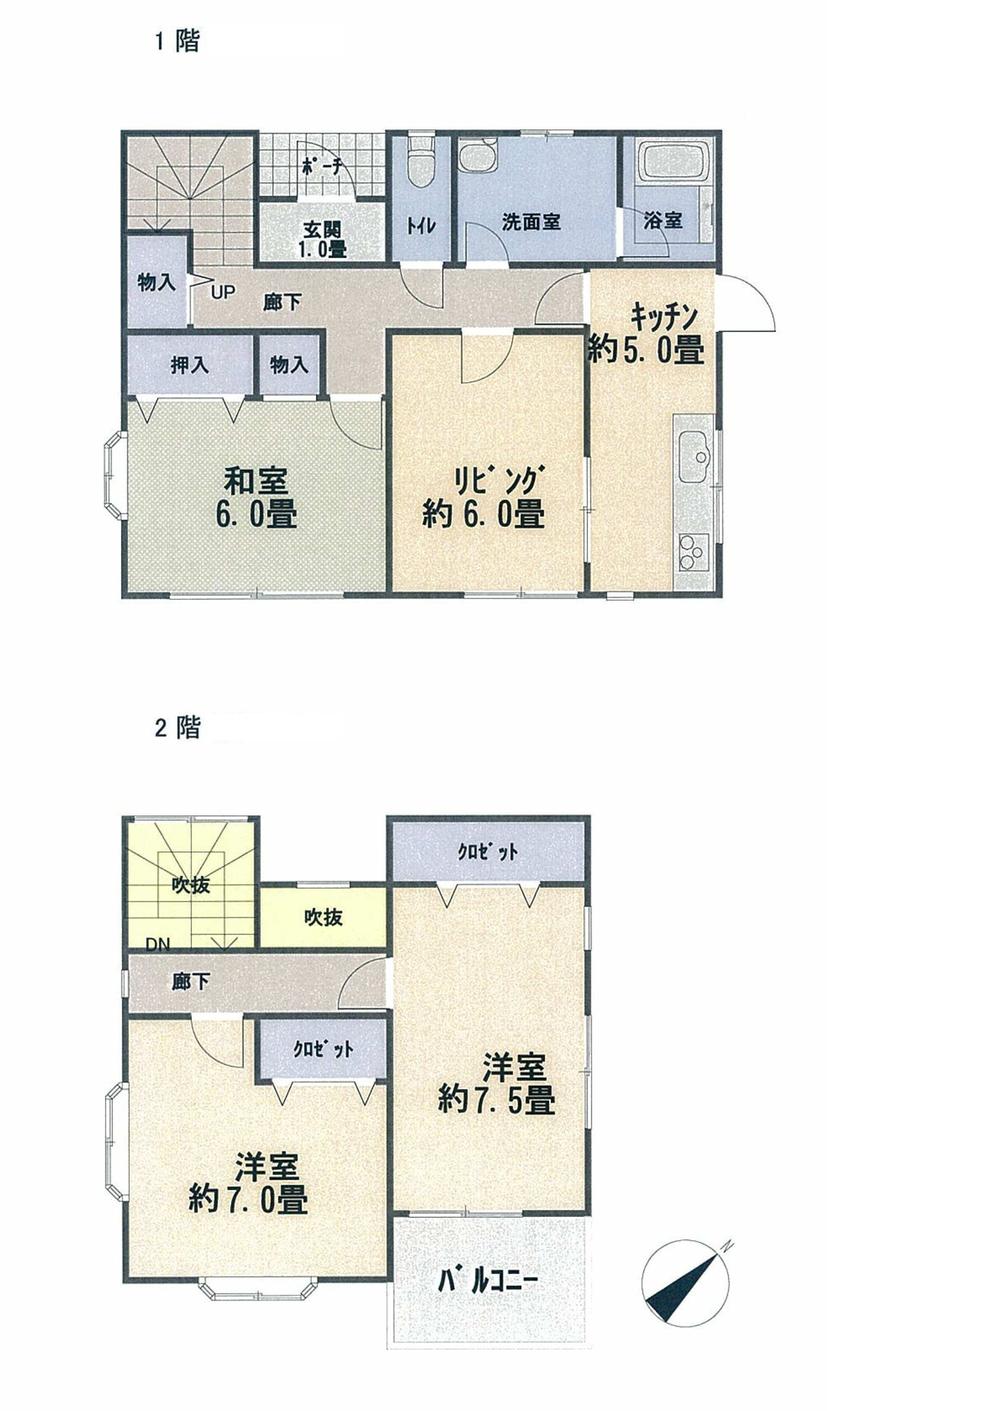 Floor plan. 22 million yen, 3LK, Land area 740.43 sq m , Building area 103 sq m